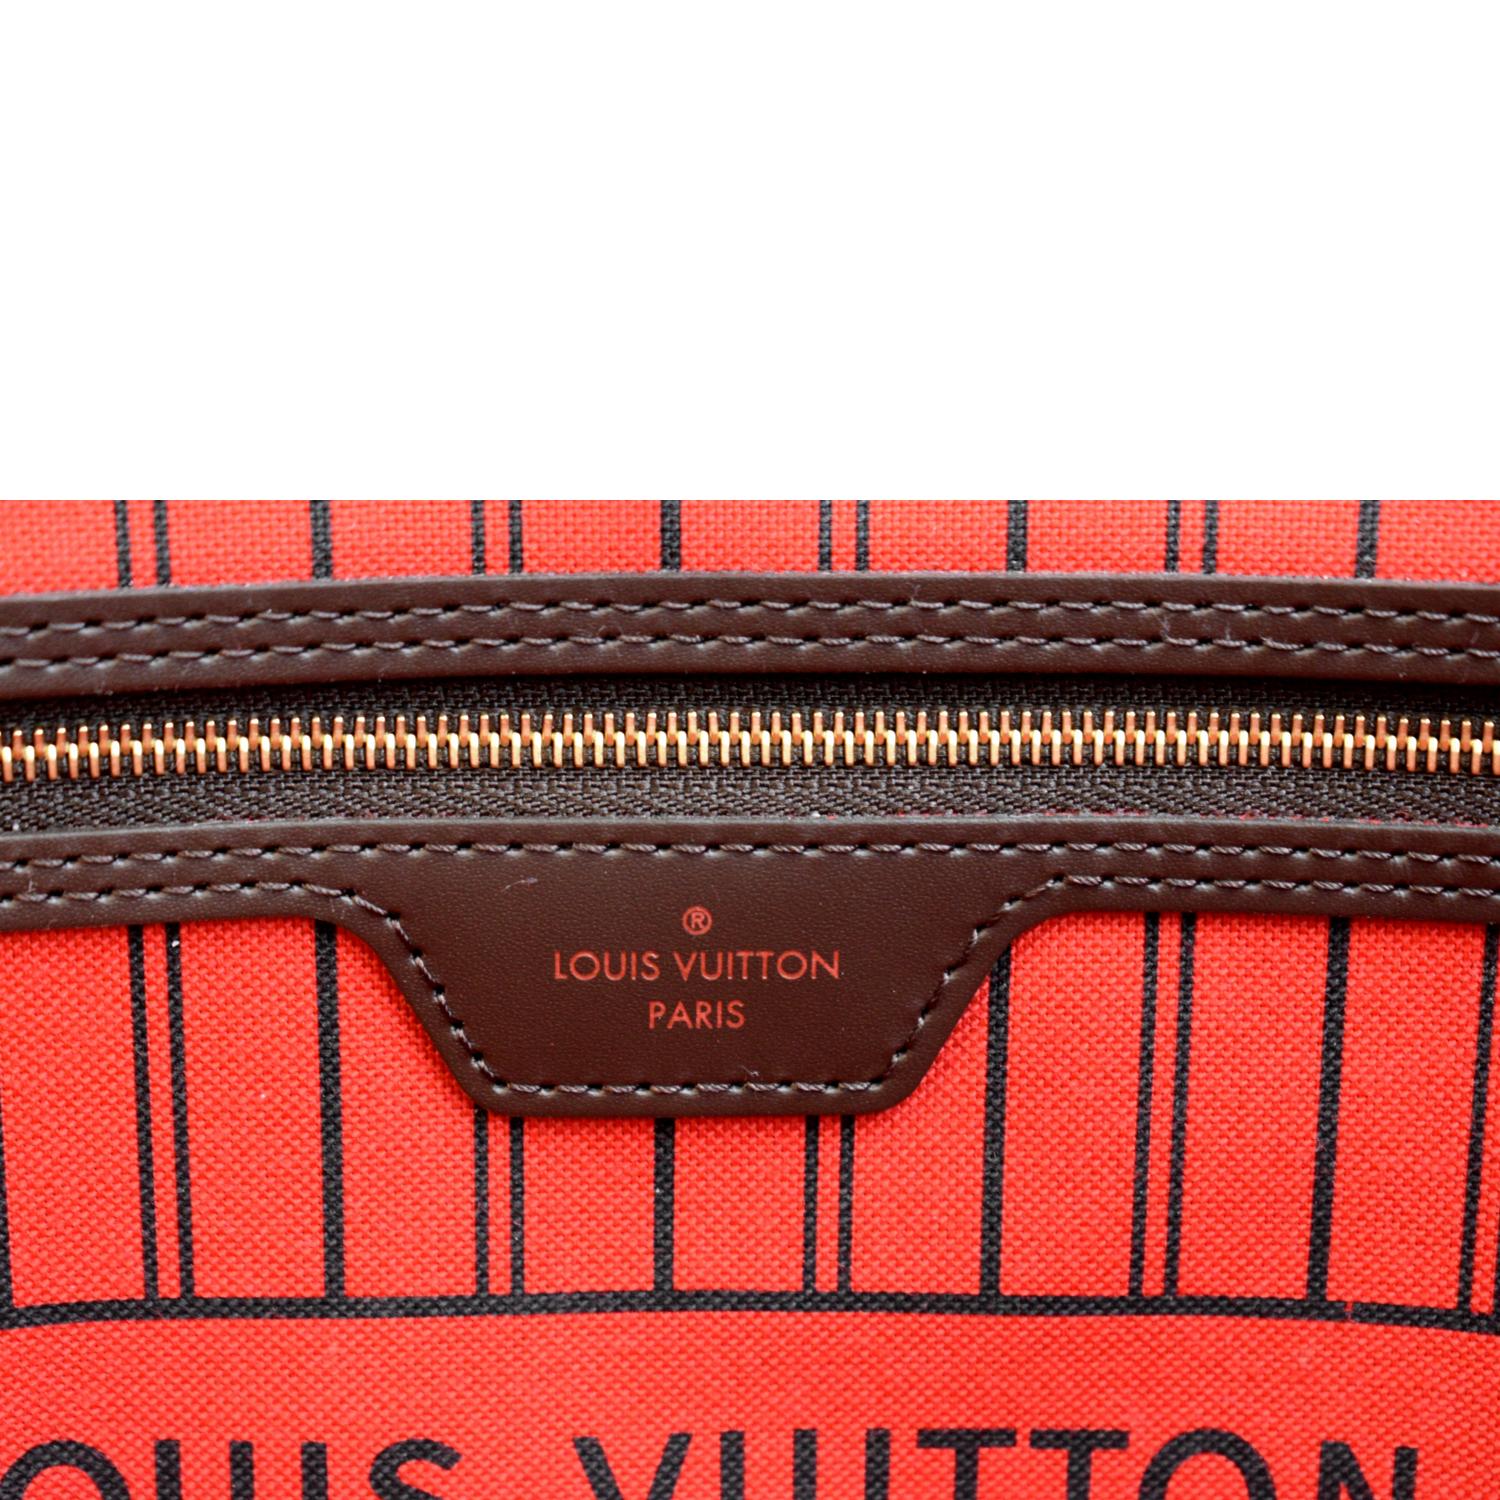 Authentic Louis Vuitton Neverfull GM Damier Ebene Tote Bag